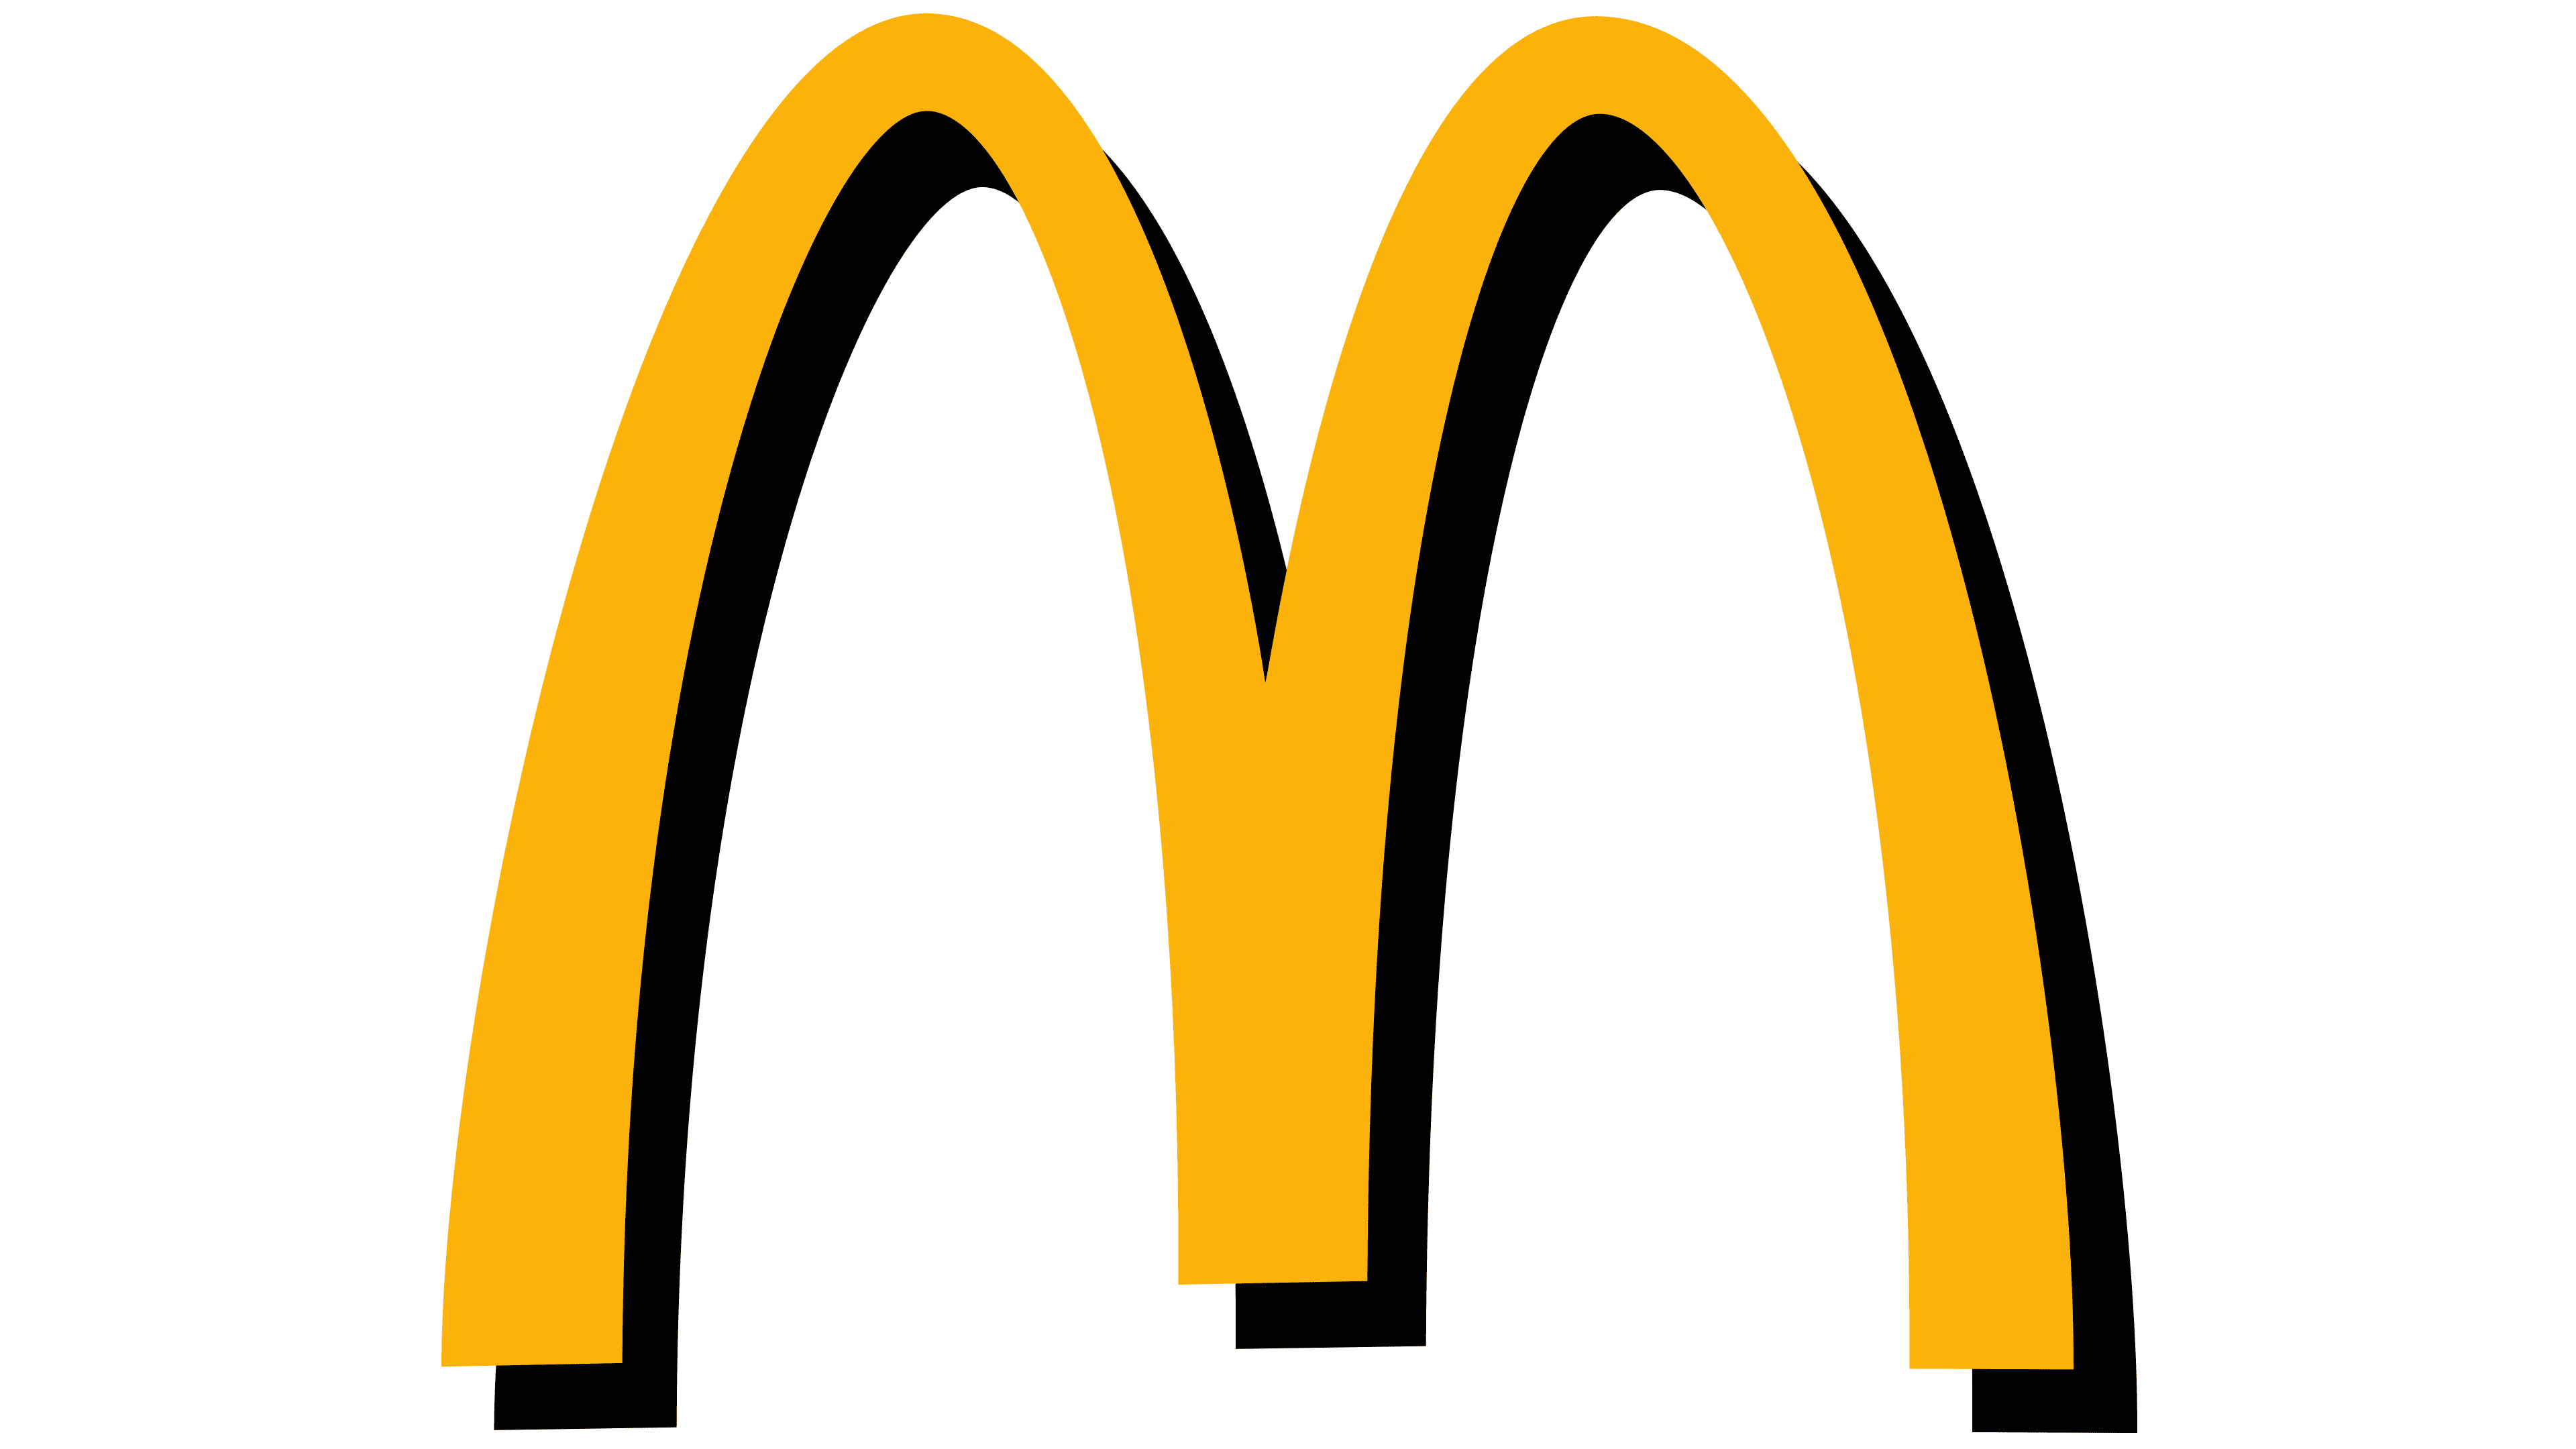 McDonalds Logo | Symbol, History, PNG (3840*2160)